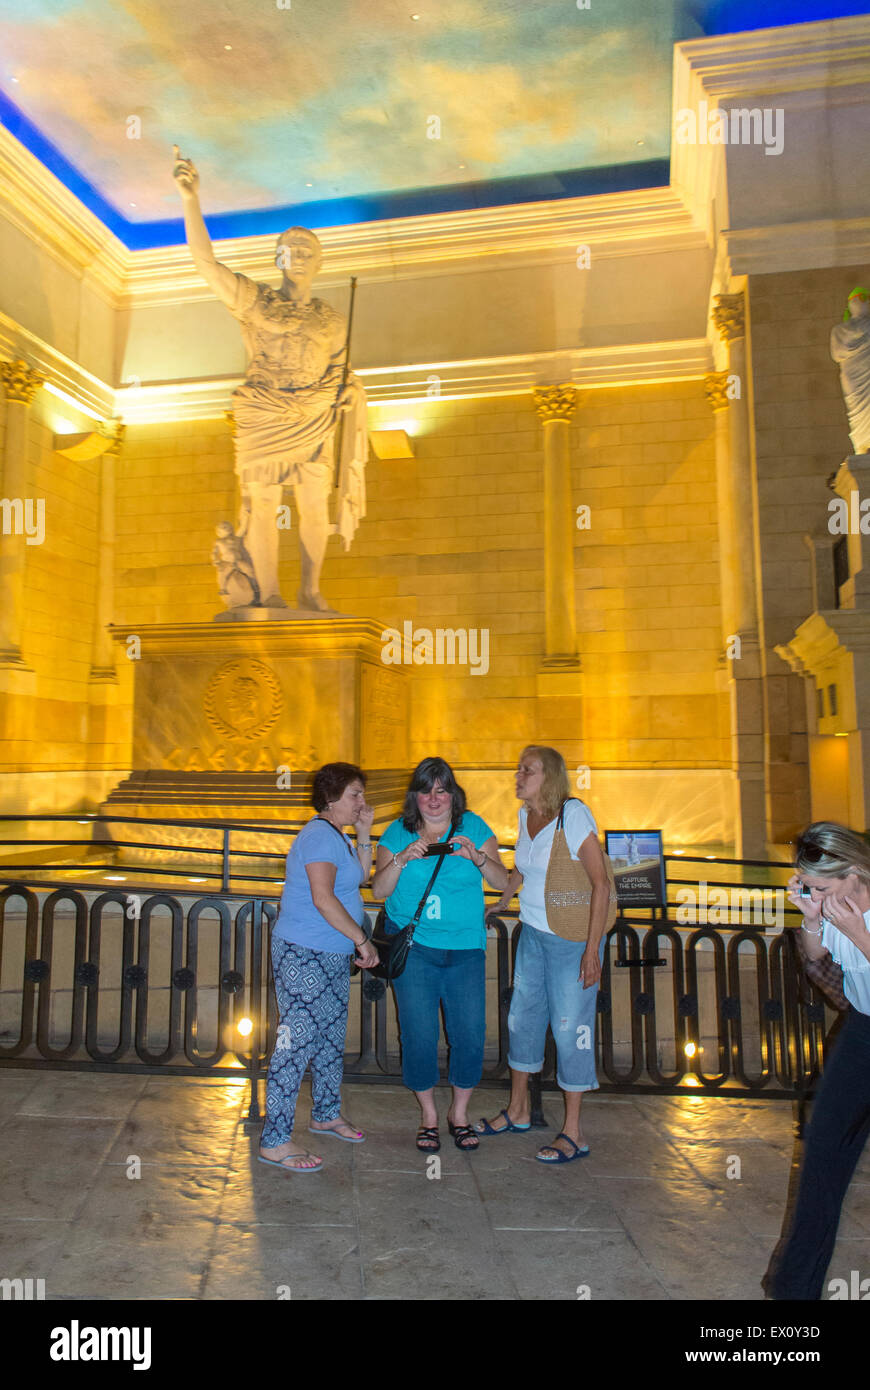 Atlantic City, NJ, USA, kleine Gruppe, 3 Frauen reisen, Touristen im Inneren, Caesar's Gambling Casino, Fotos machen, Statue Stockfoto